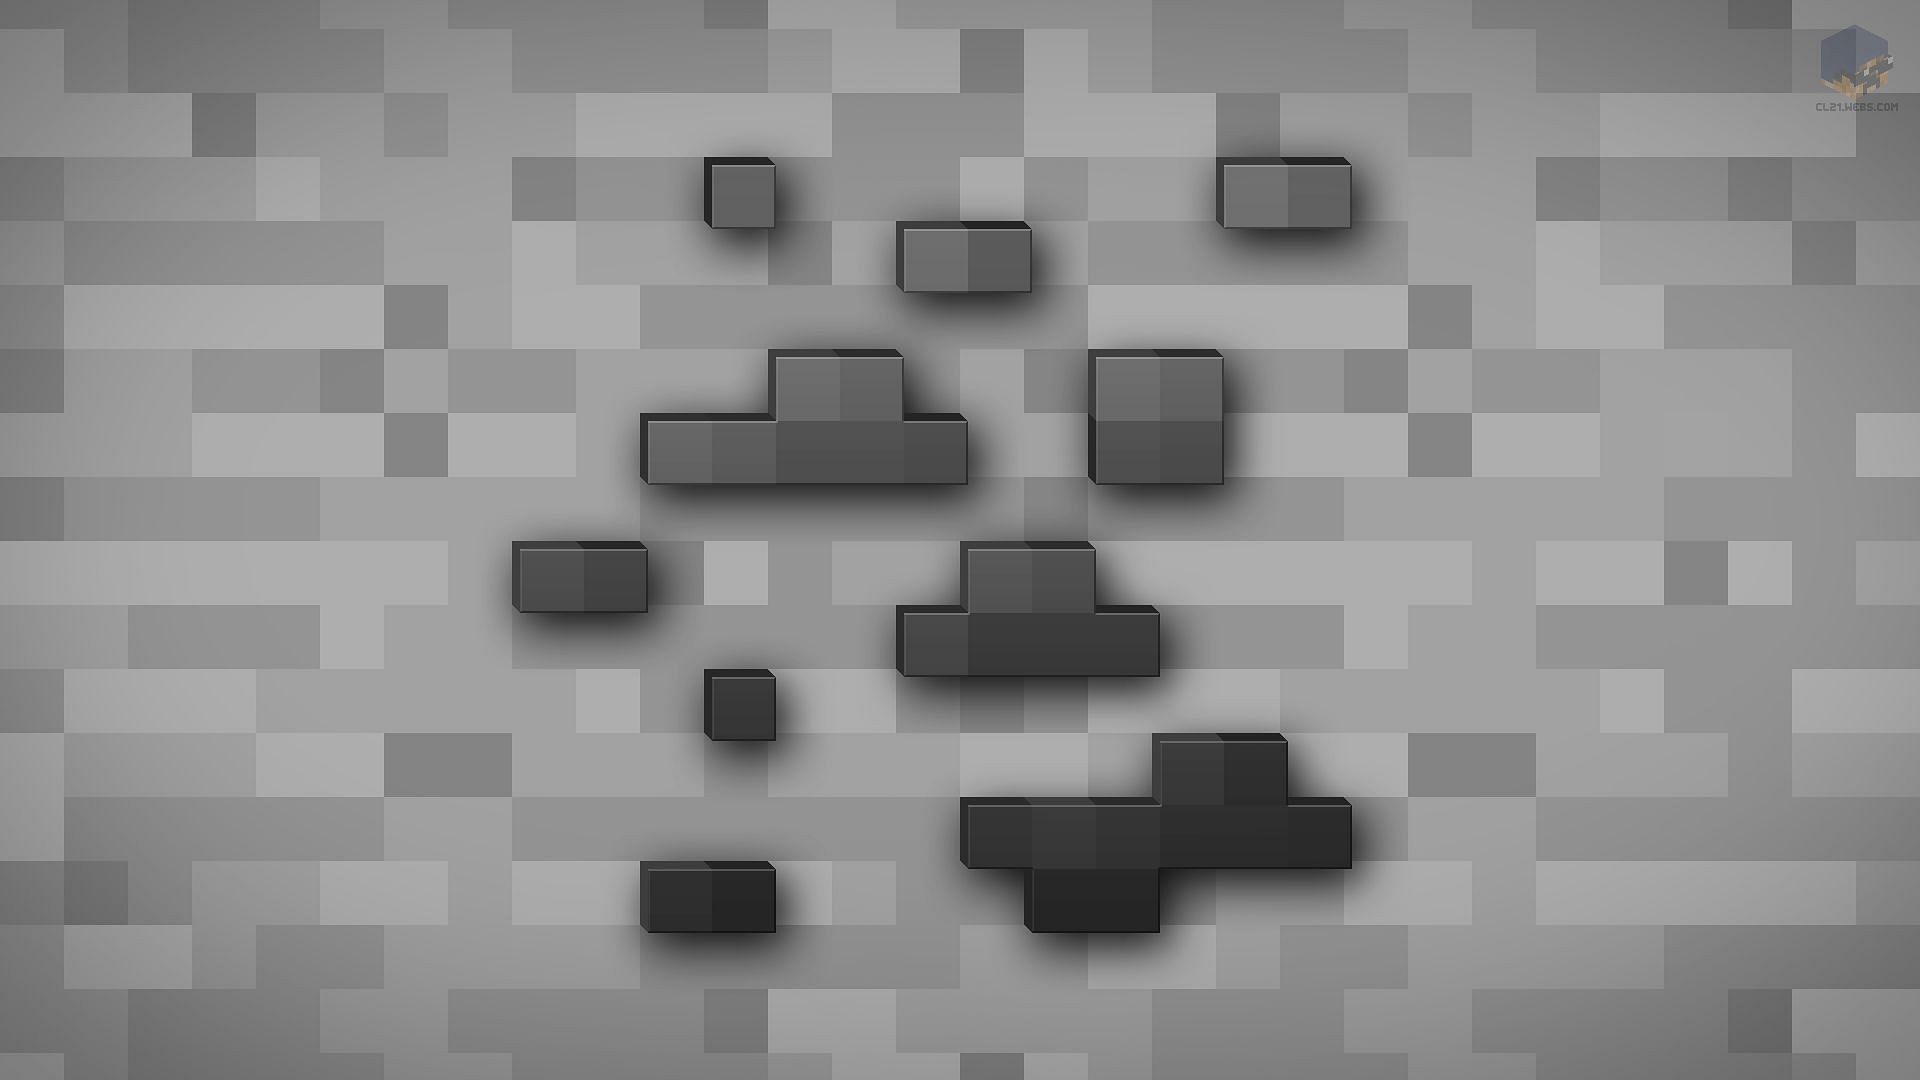 Coal ore in Minecraft (Image via Minecraft)